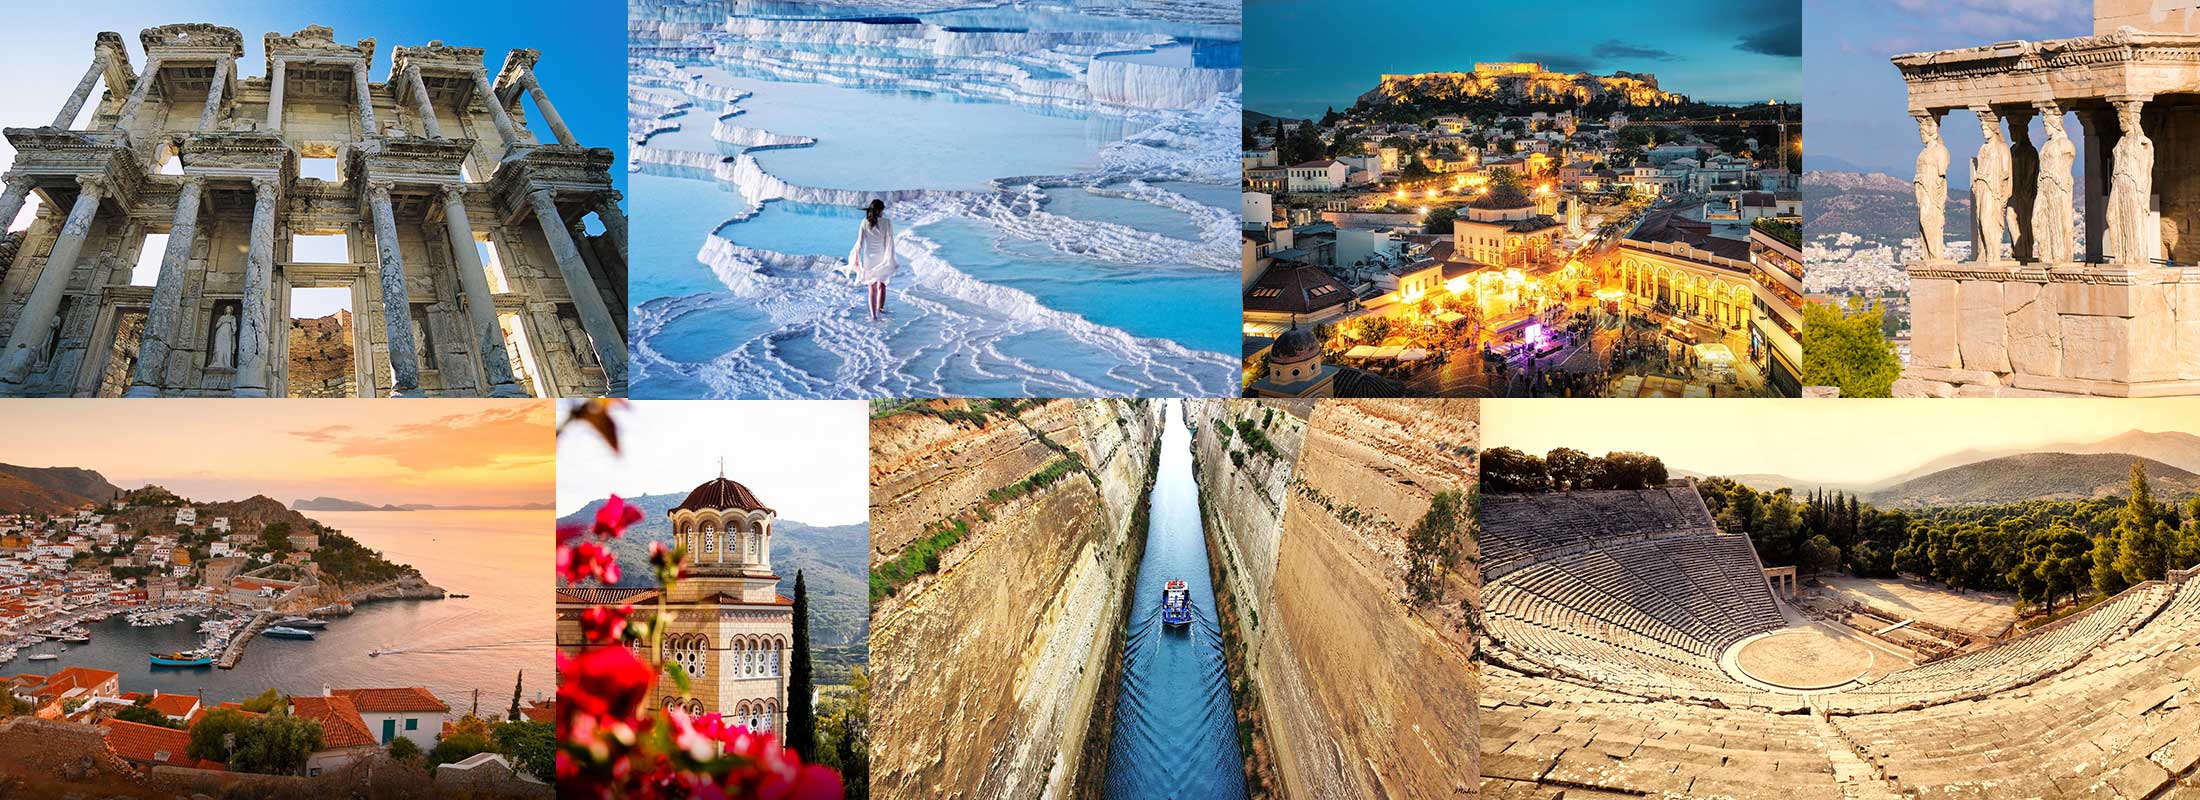 6-DAYS-TURKEY-GREECE-PACKAGE-TOUR-EPHESUS-PAMUKKALE-ATHENS-AEGINA-HYDRA-POROS-CORINTO